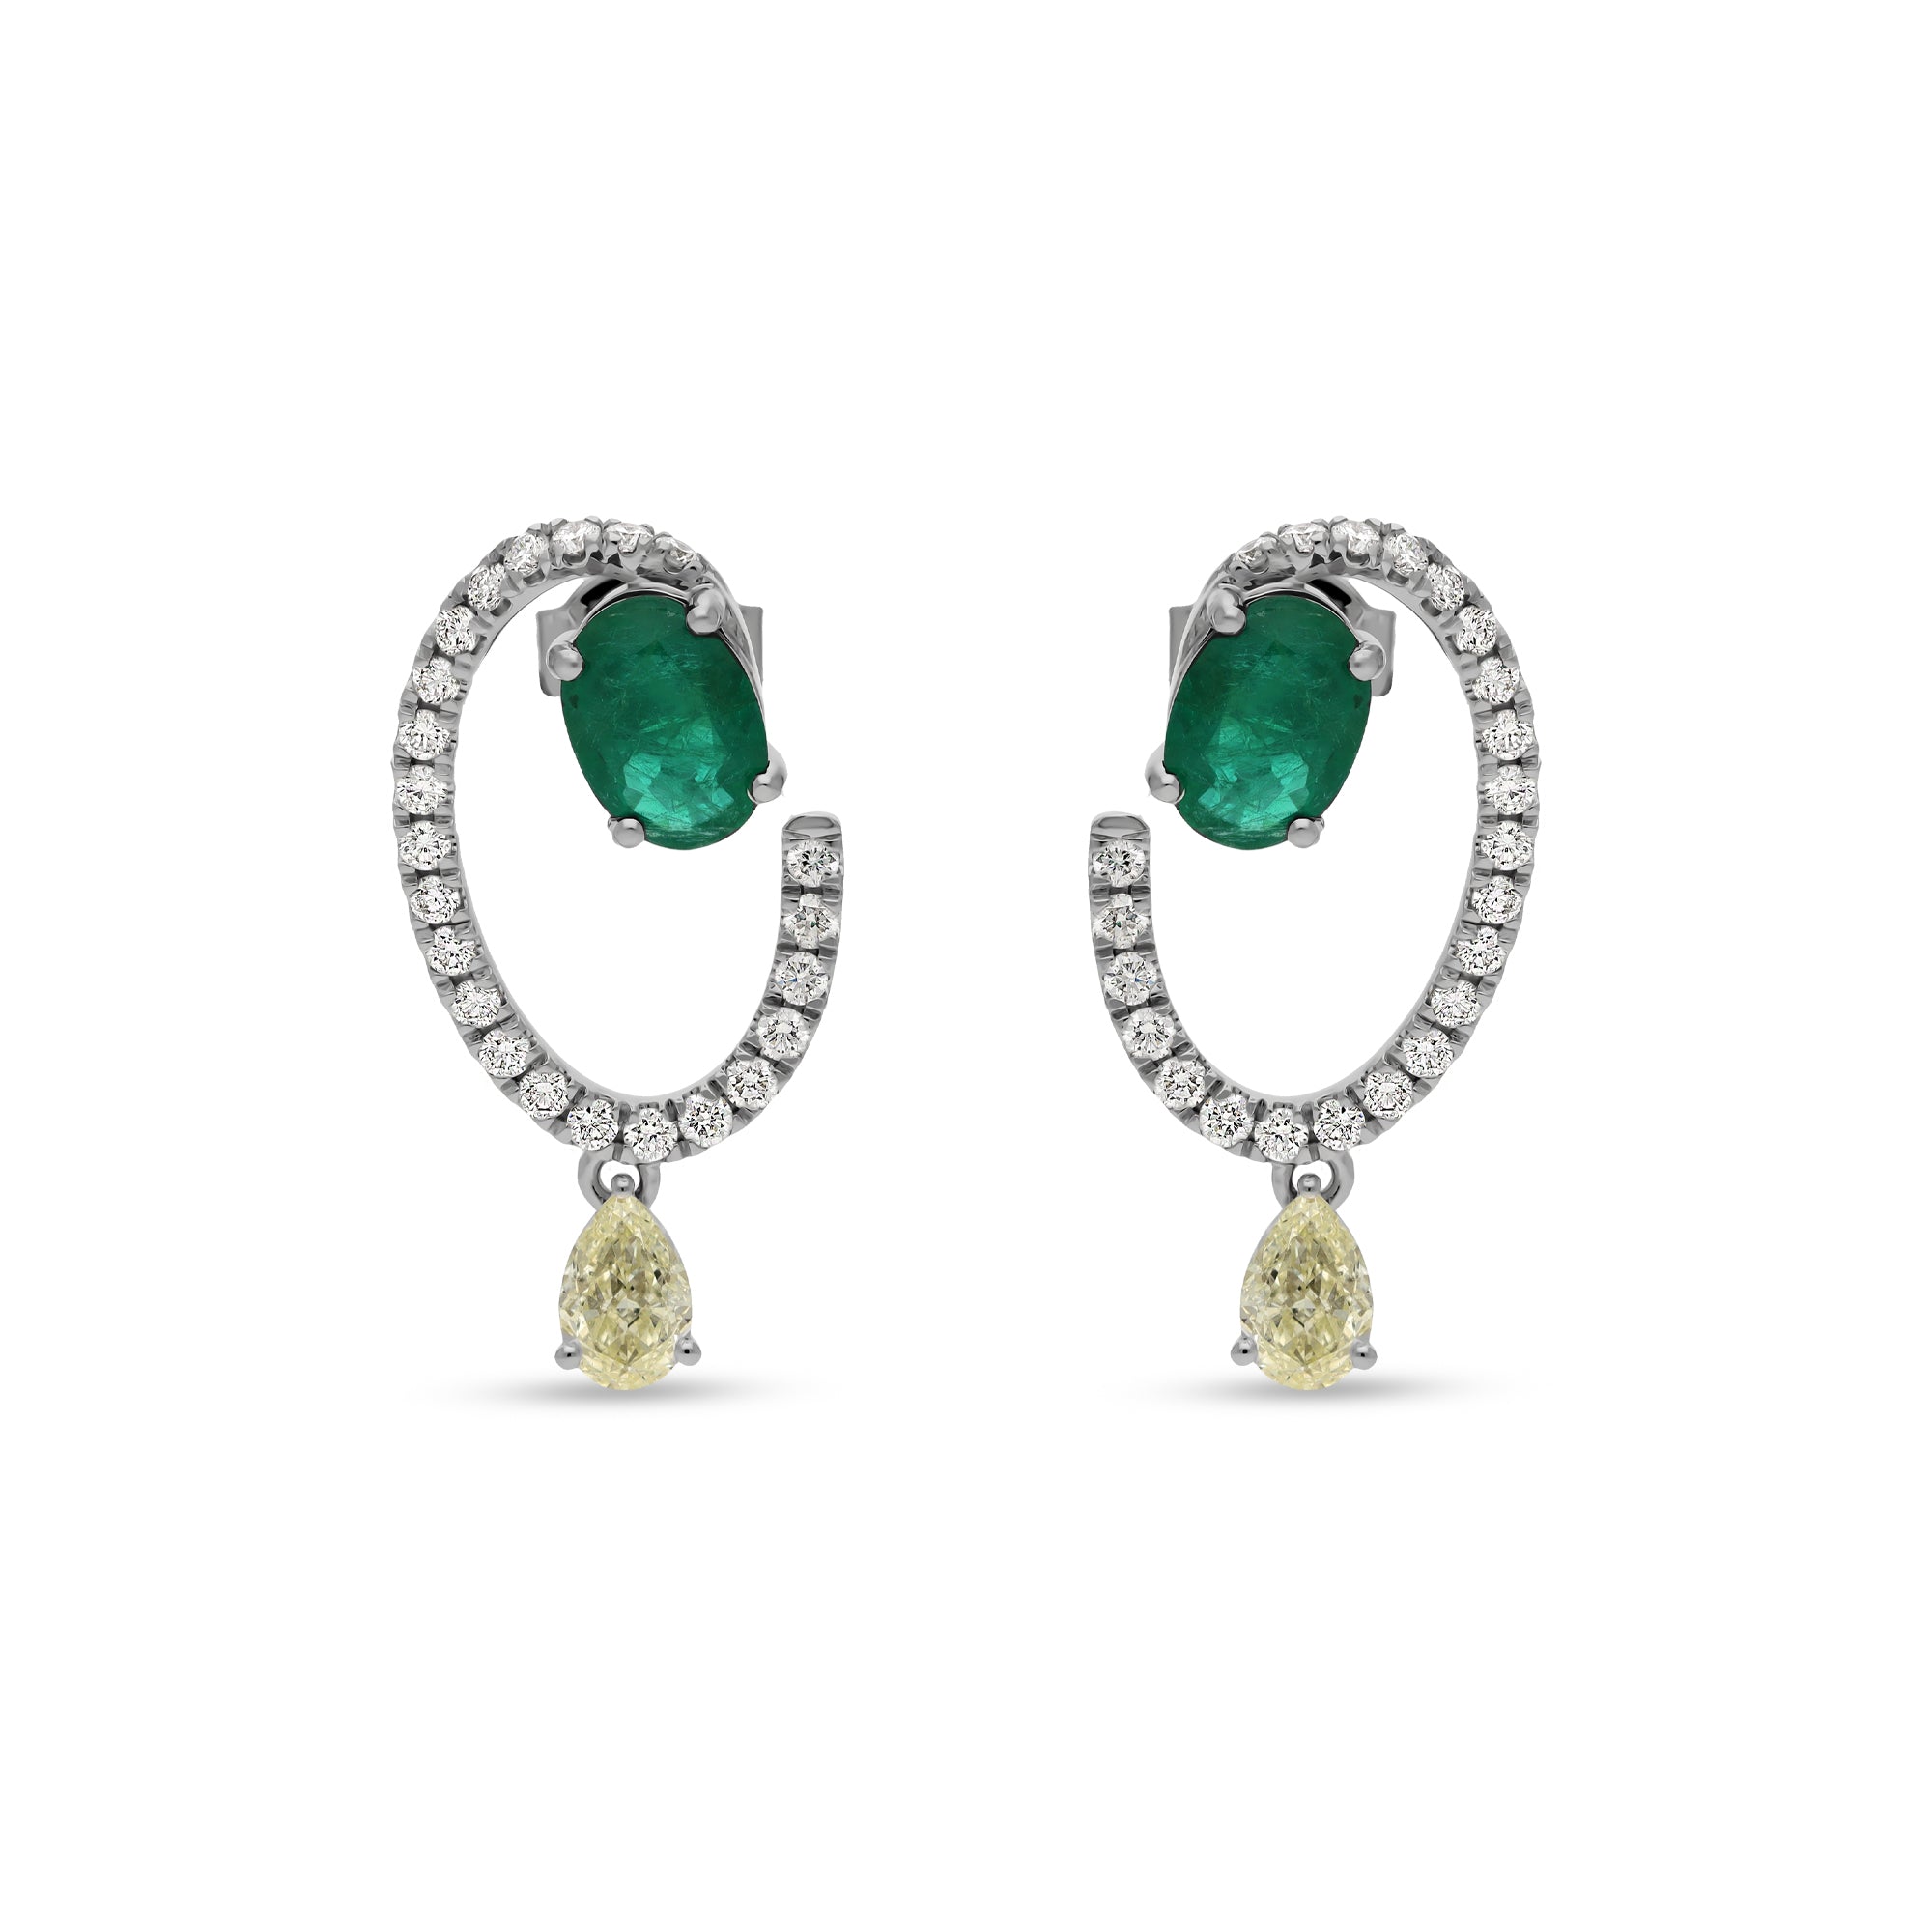 Green Oval Emerald Center Diamond With Pear Shape Diamond White Gold Drop Earrings